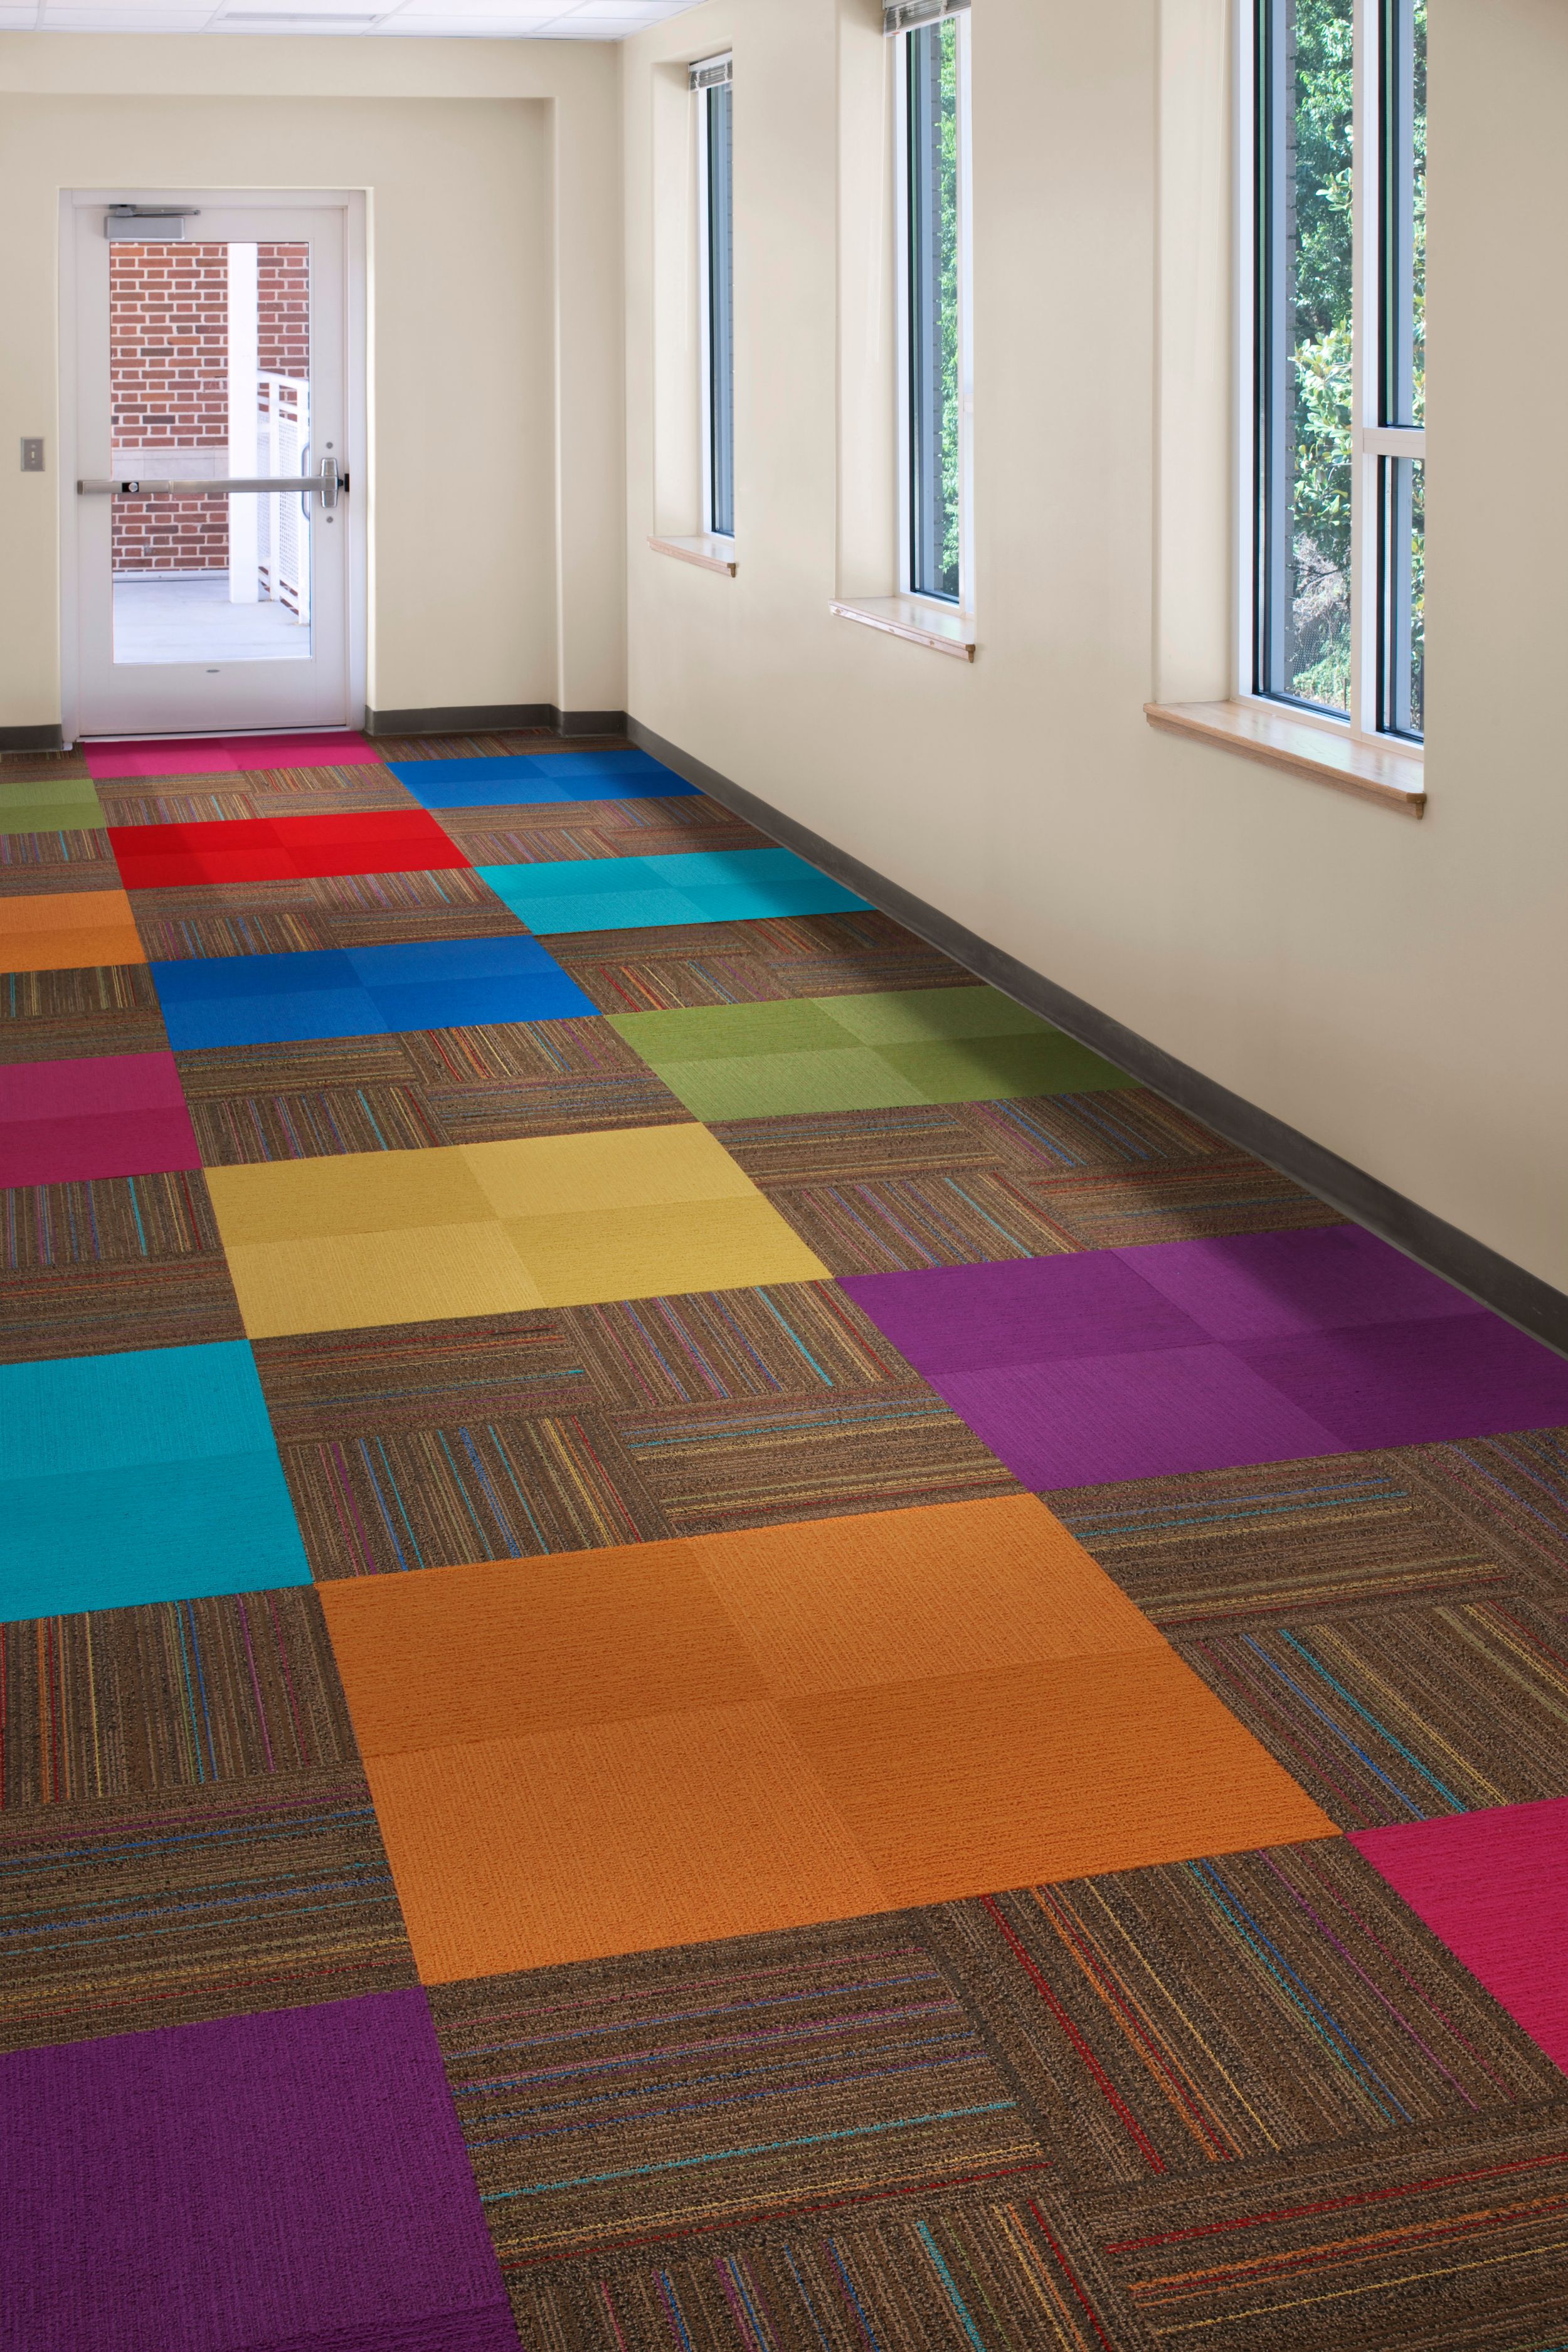 Interface Roy G Biv and Viva Colores carpet tile in open hallway imagen número 6